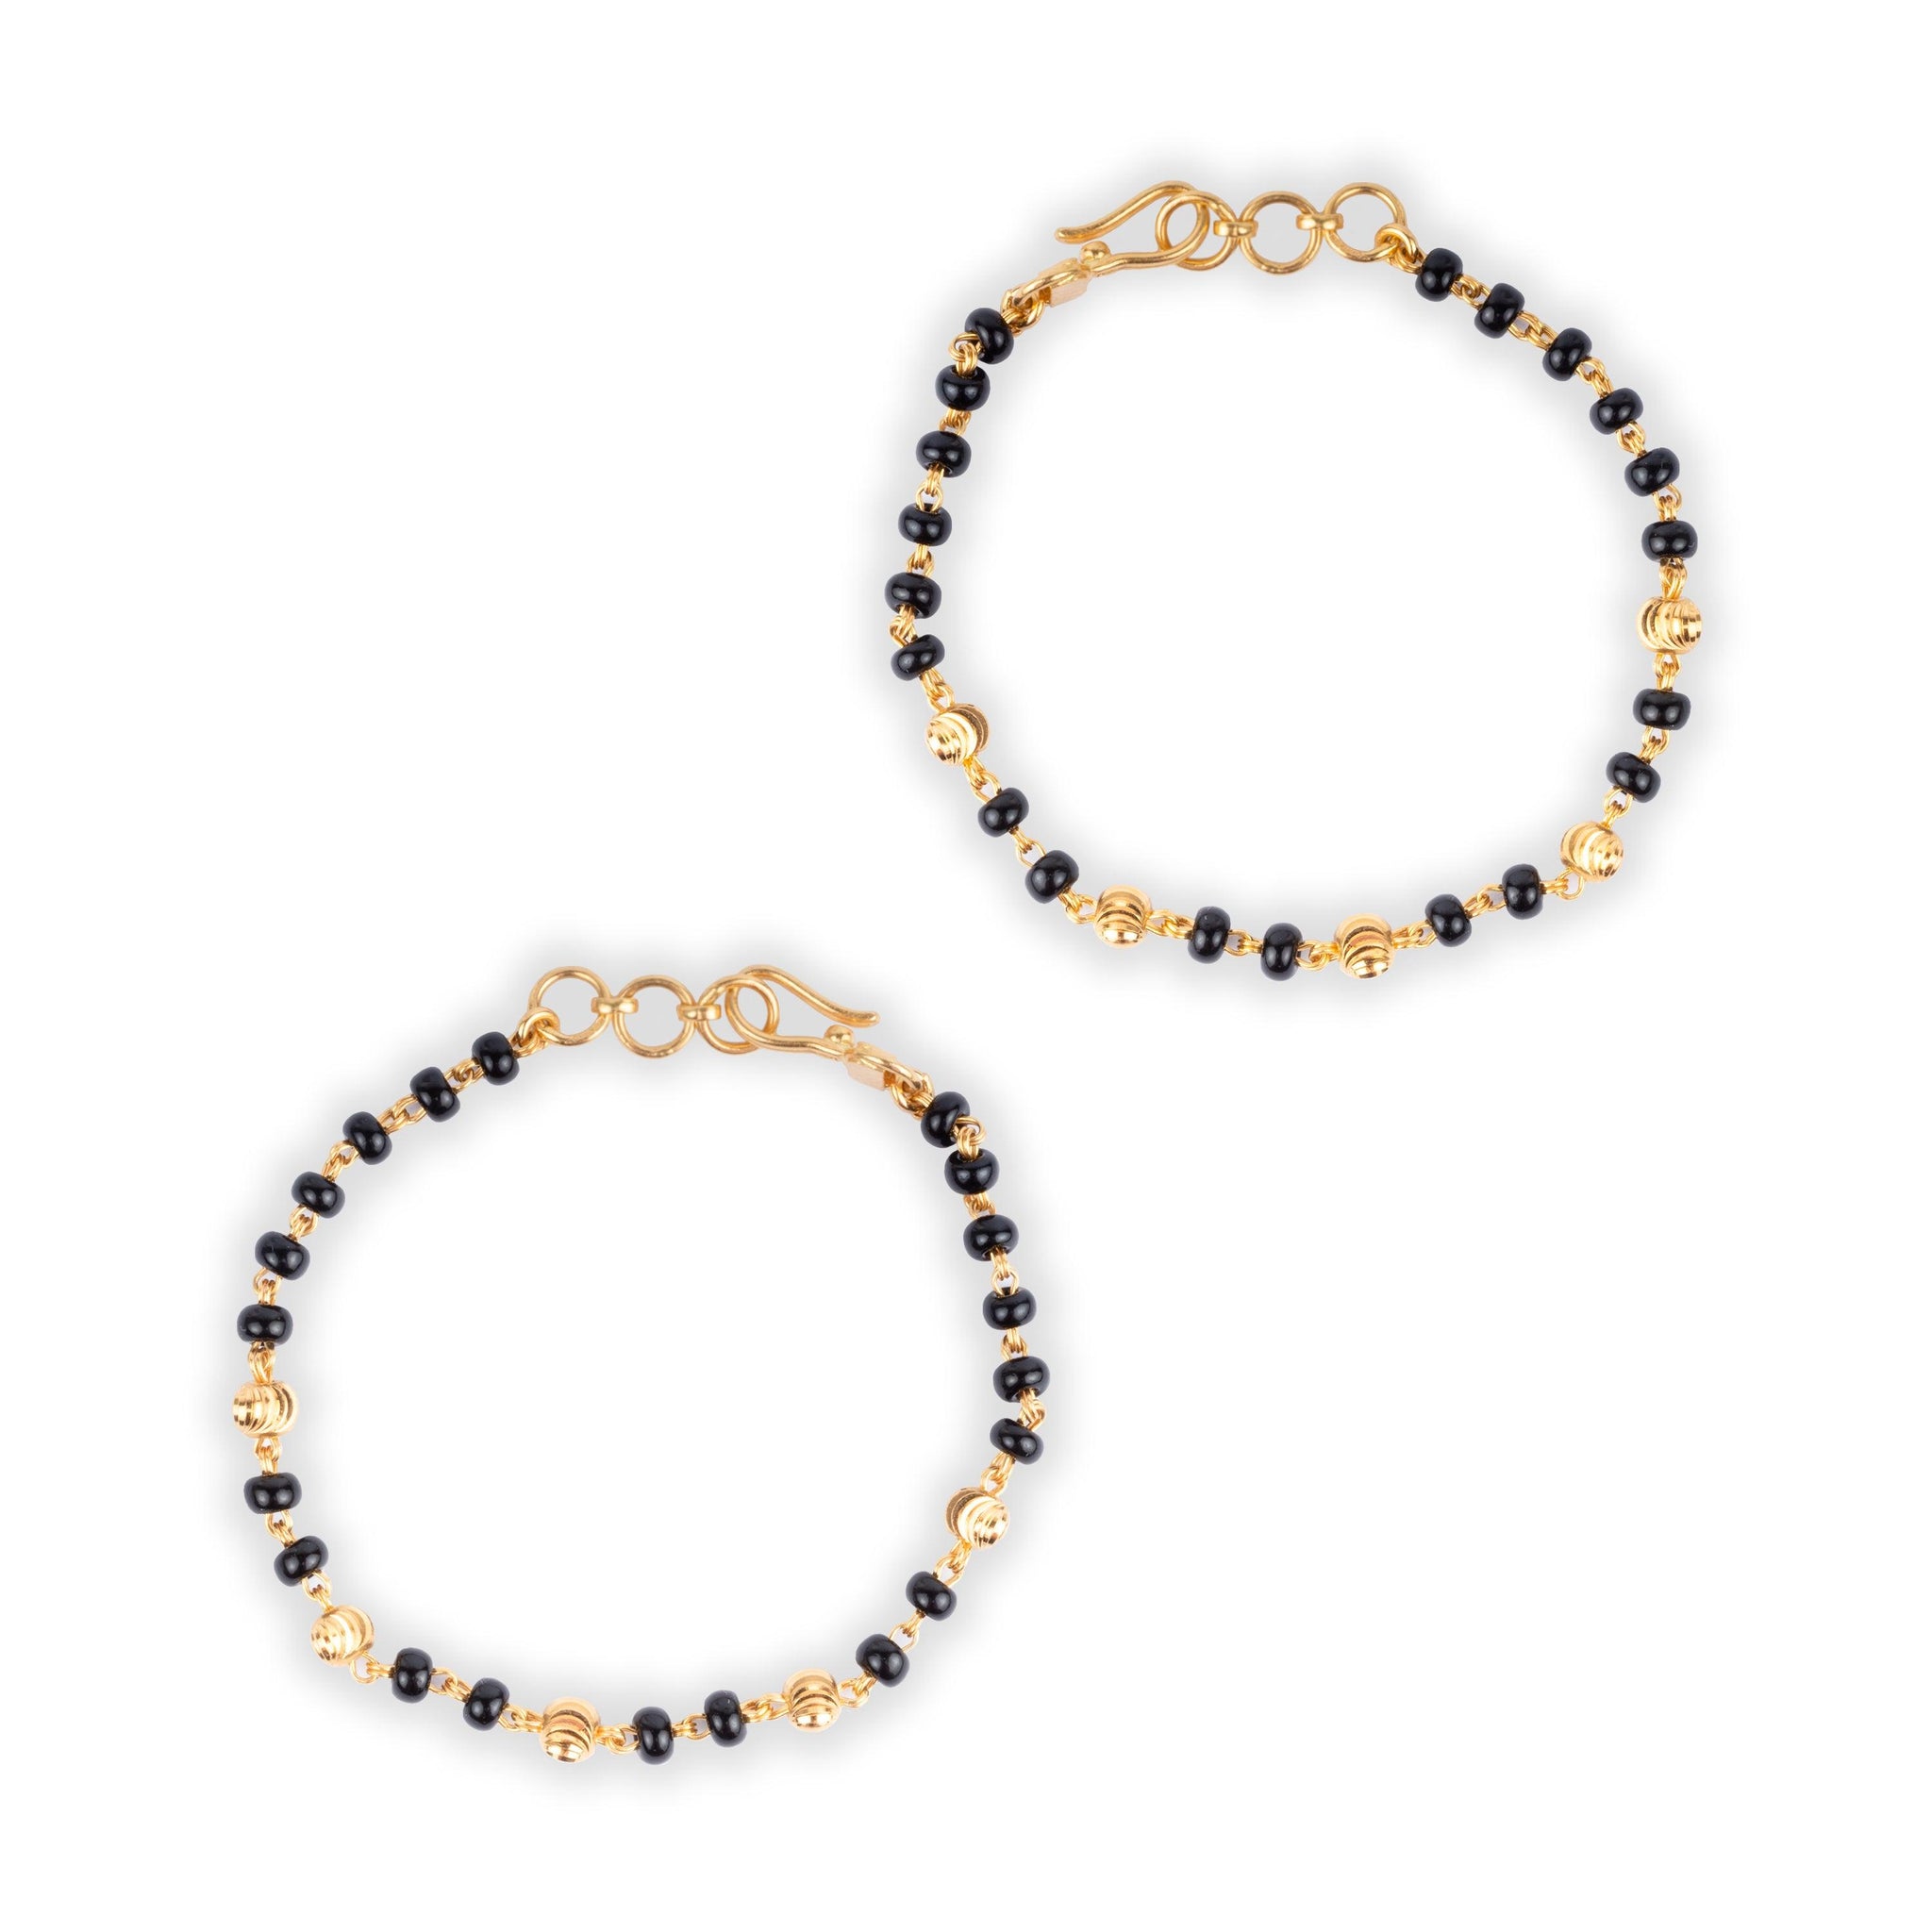 22ct Gold Black Bead Children's Bracelets with Hook Clasp CBR-8270